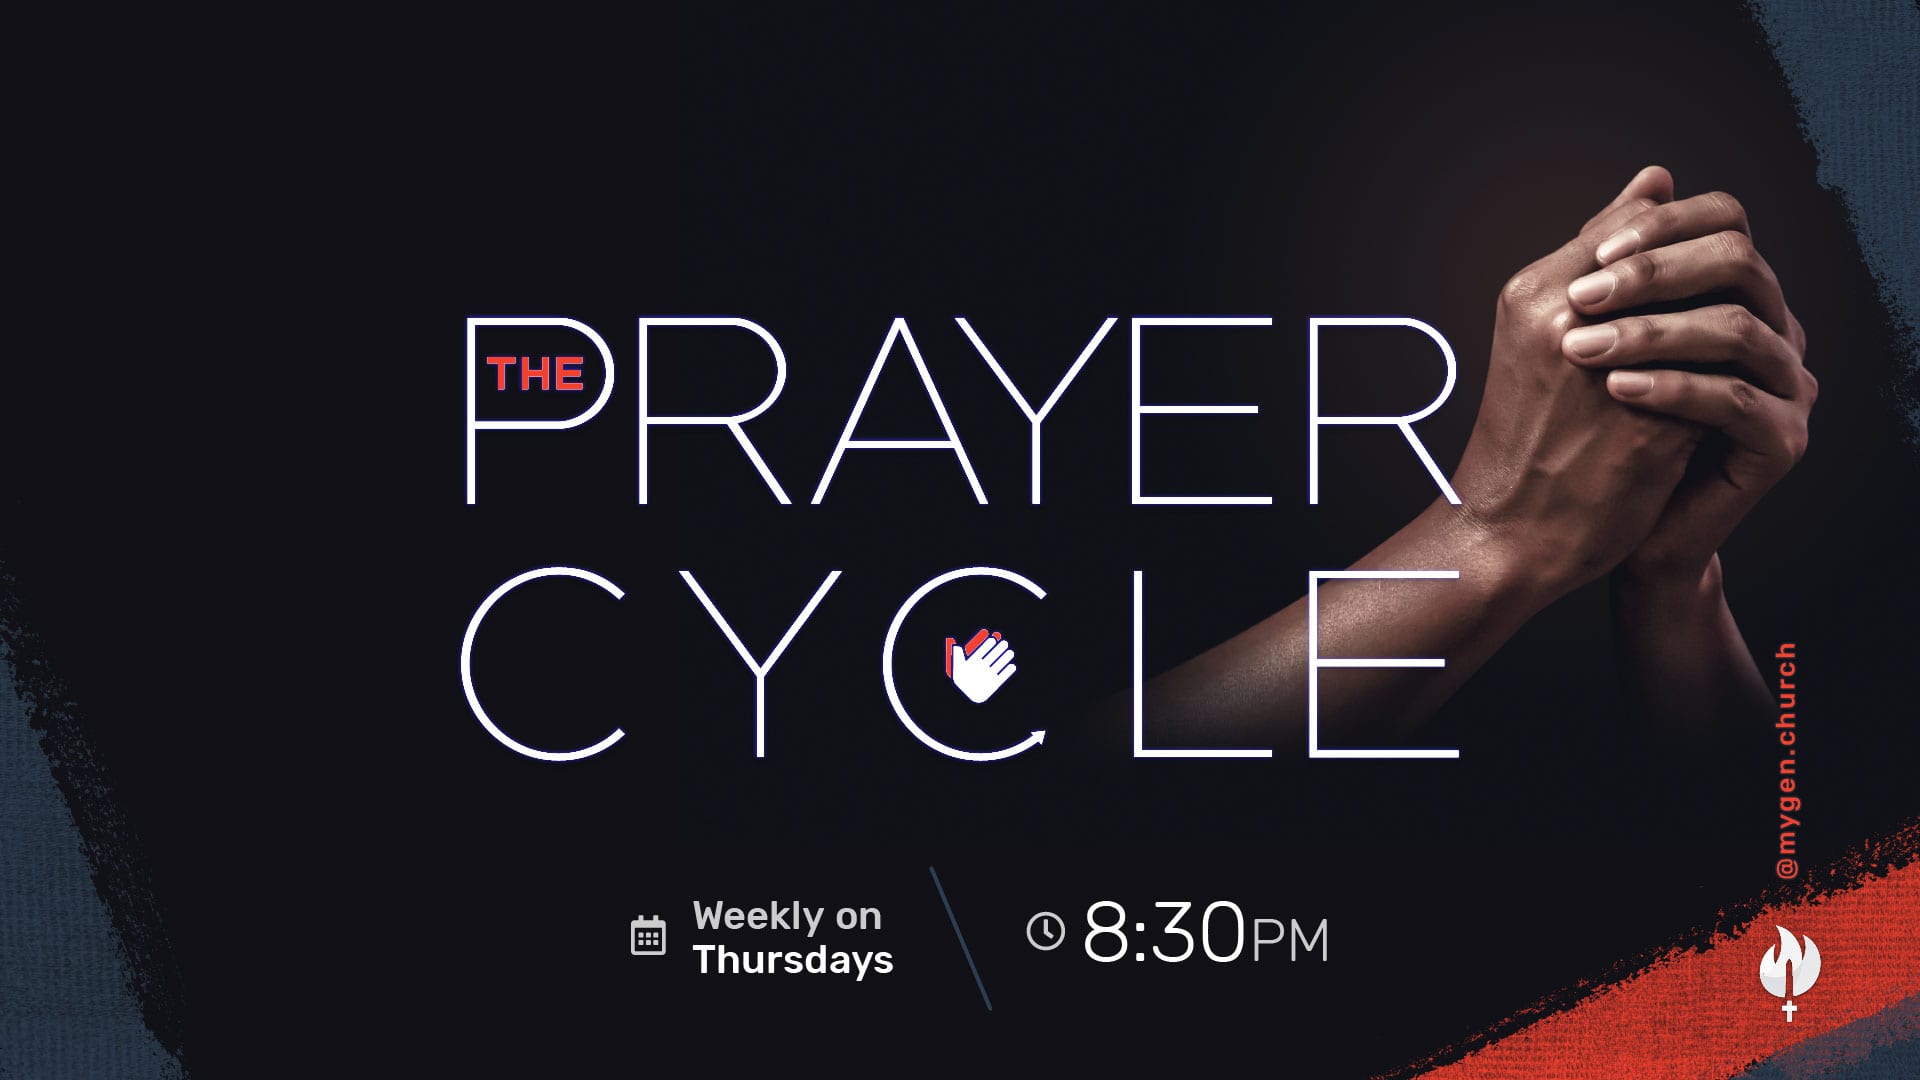 The Prayer Cycle at MyGeneration Church